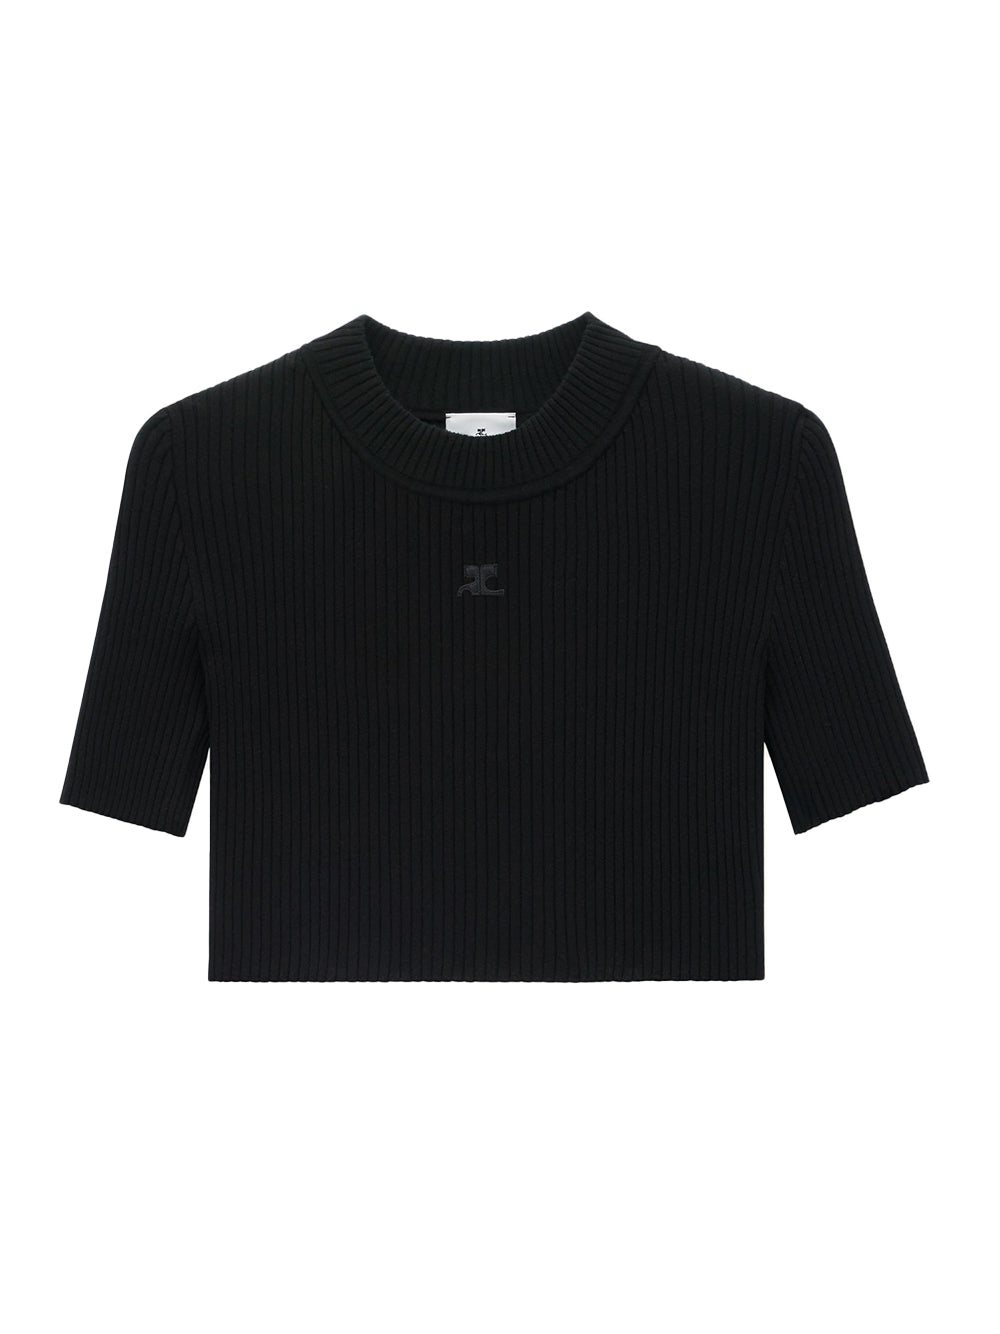 Mockneck Rib Knit Crop Top (Black)